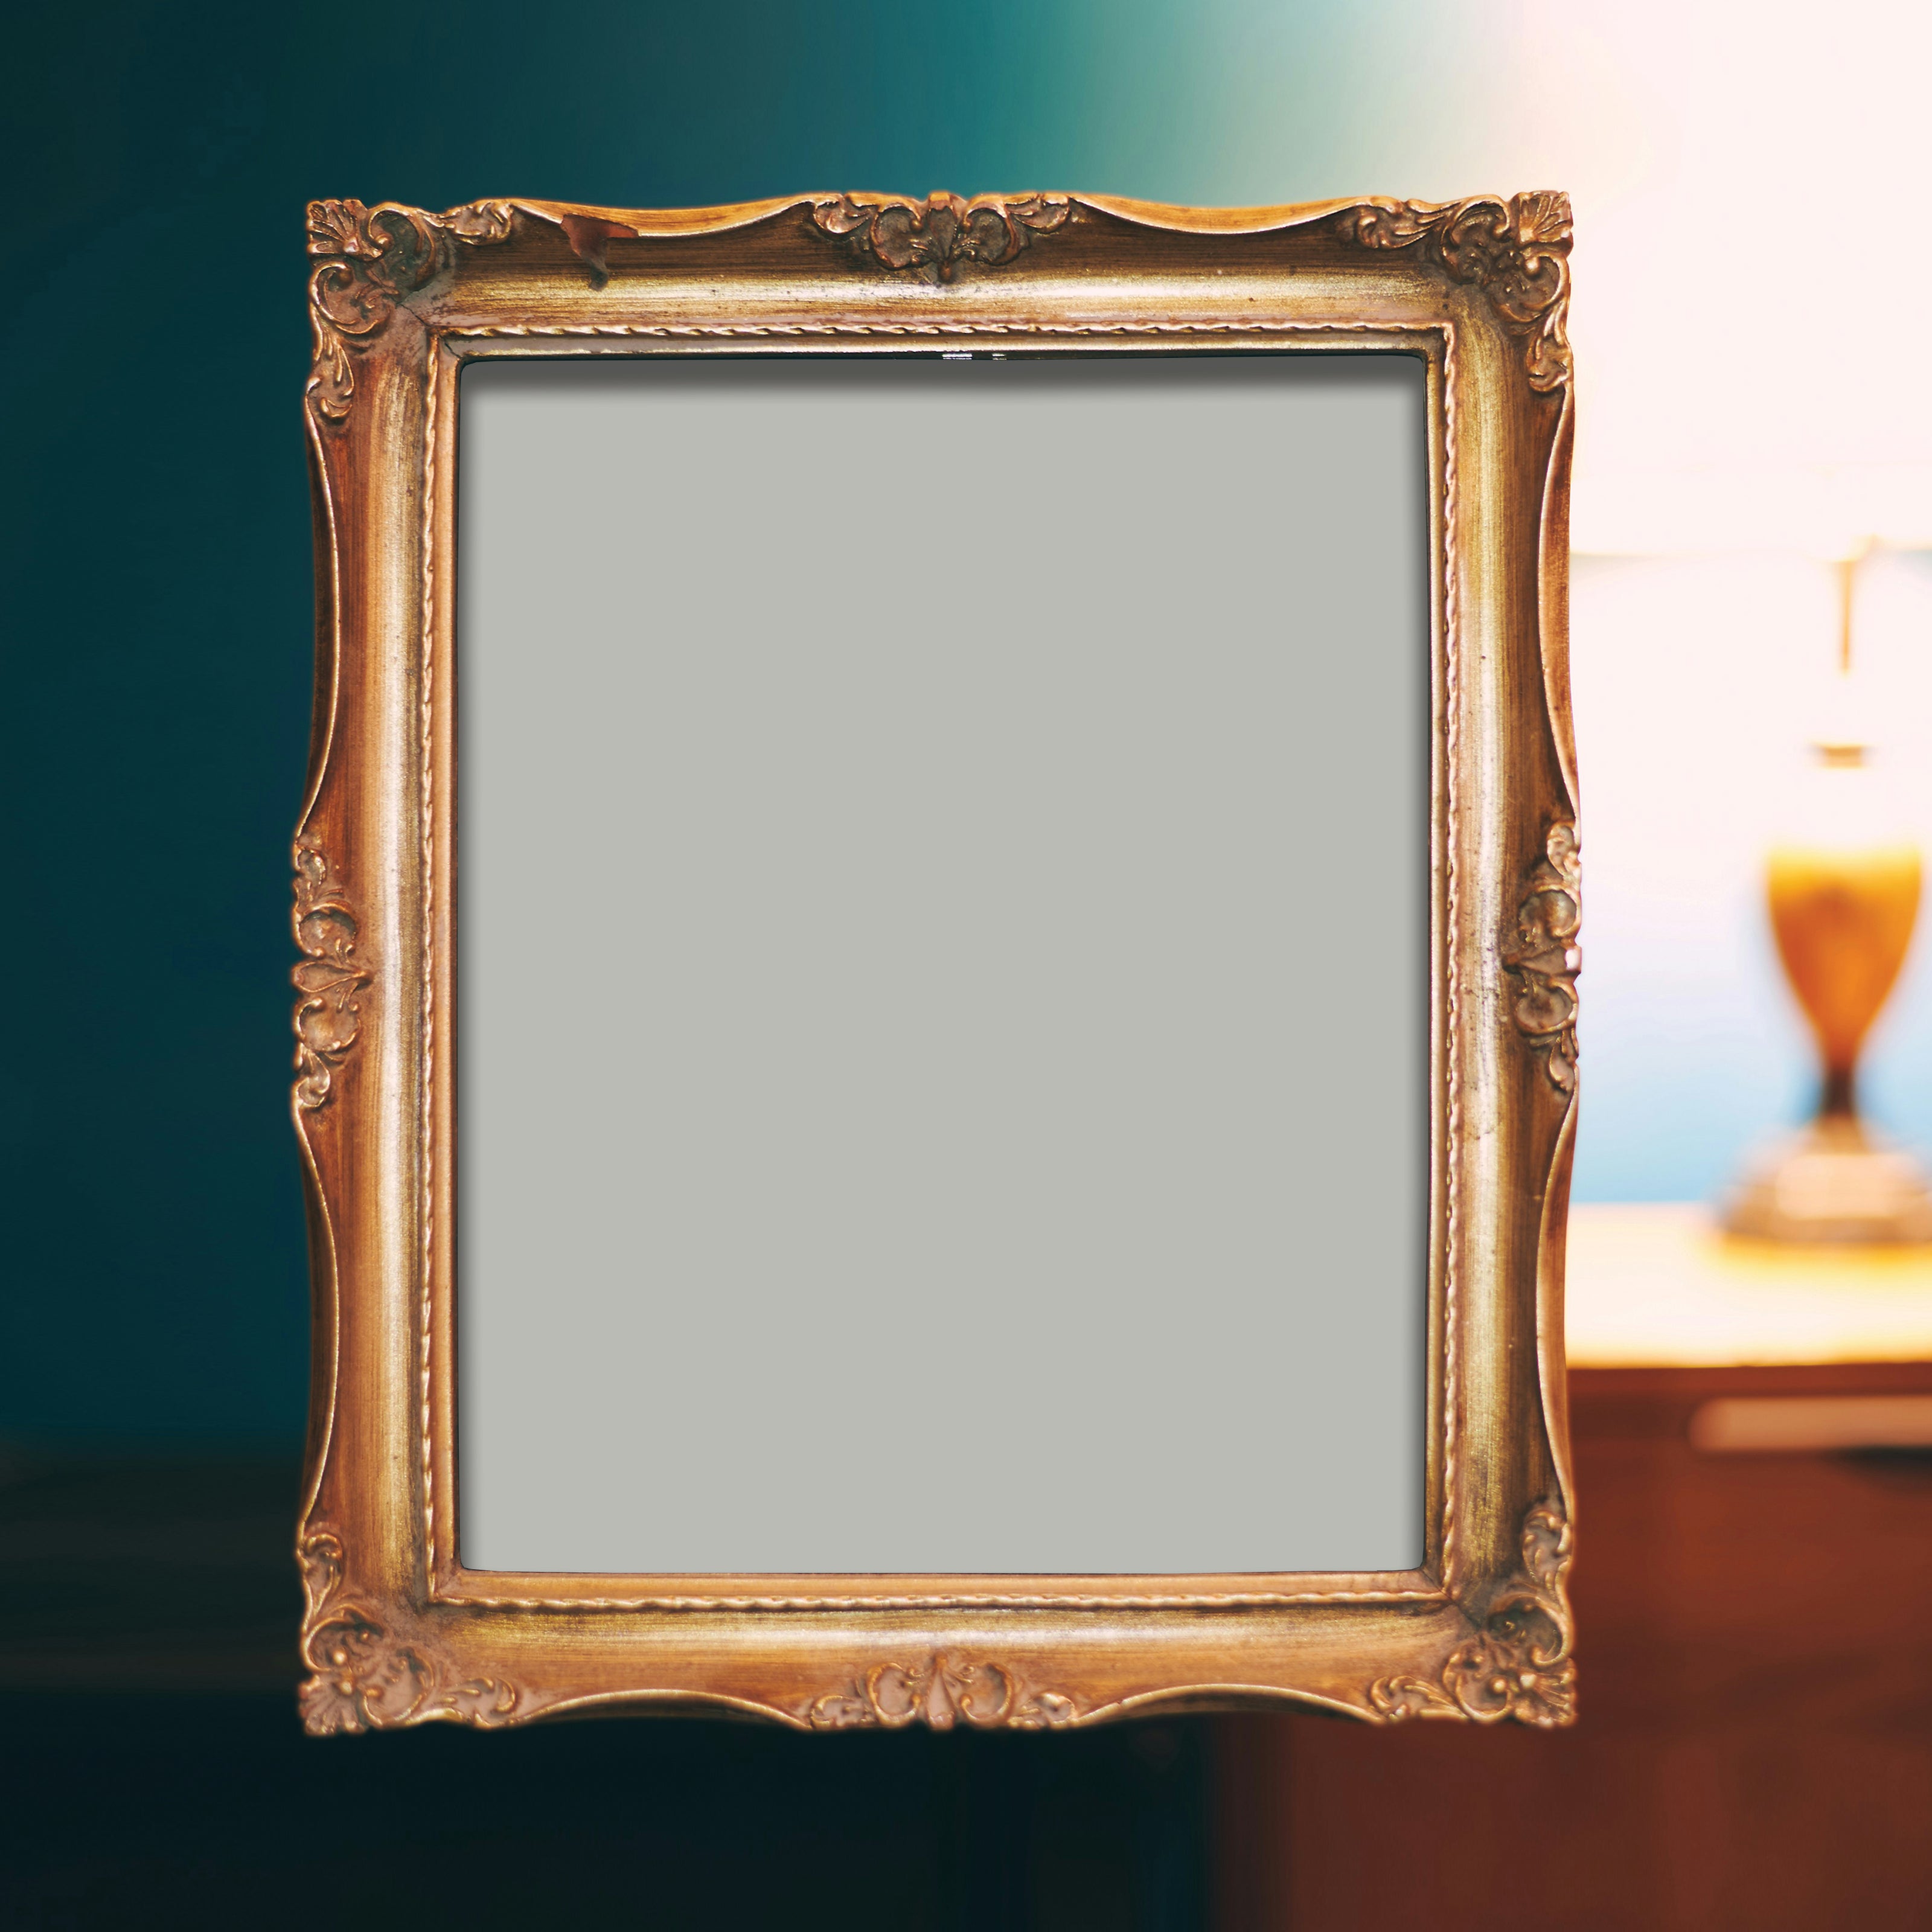 a decorative picture frame